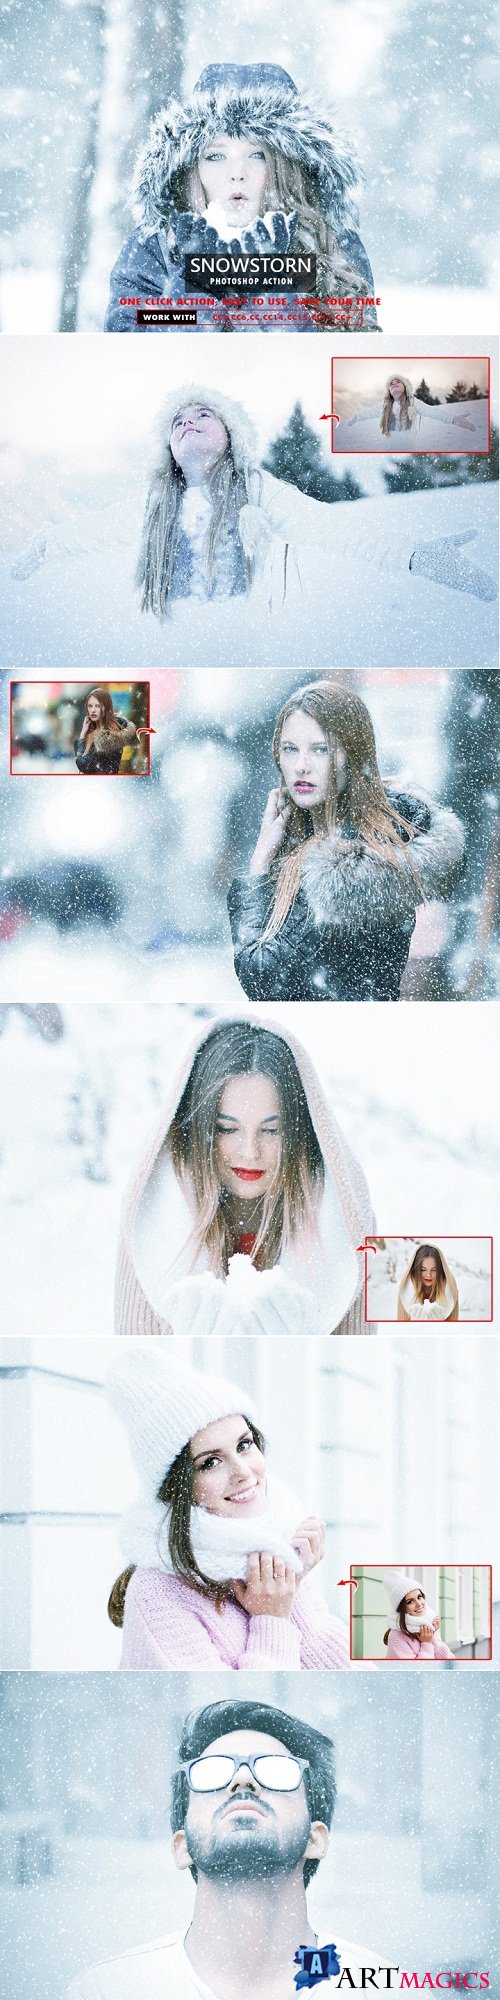 Thehungryjpeg - Snowstorm Photoshop Action - 3514921